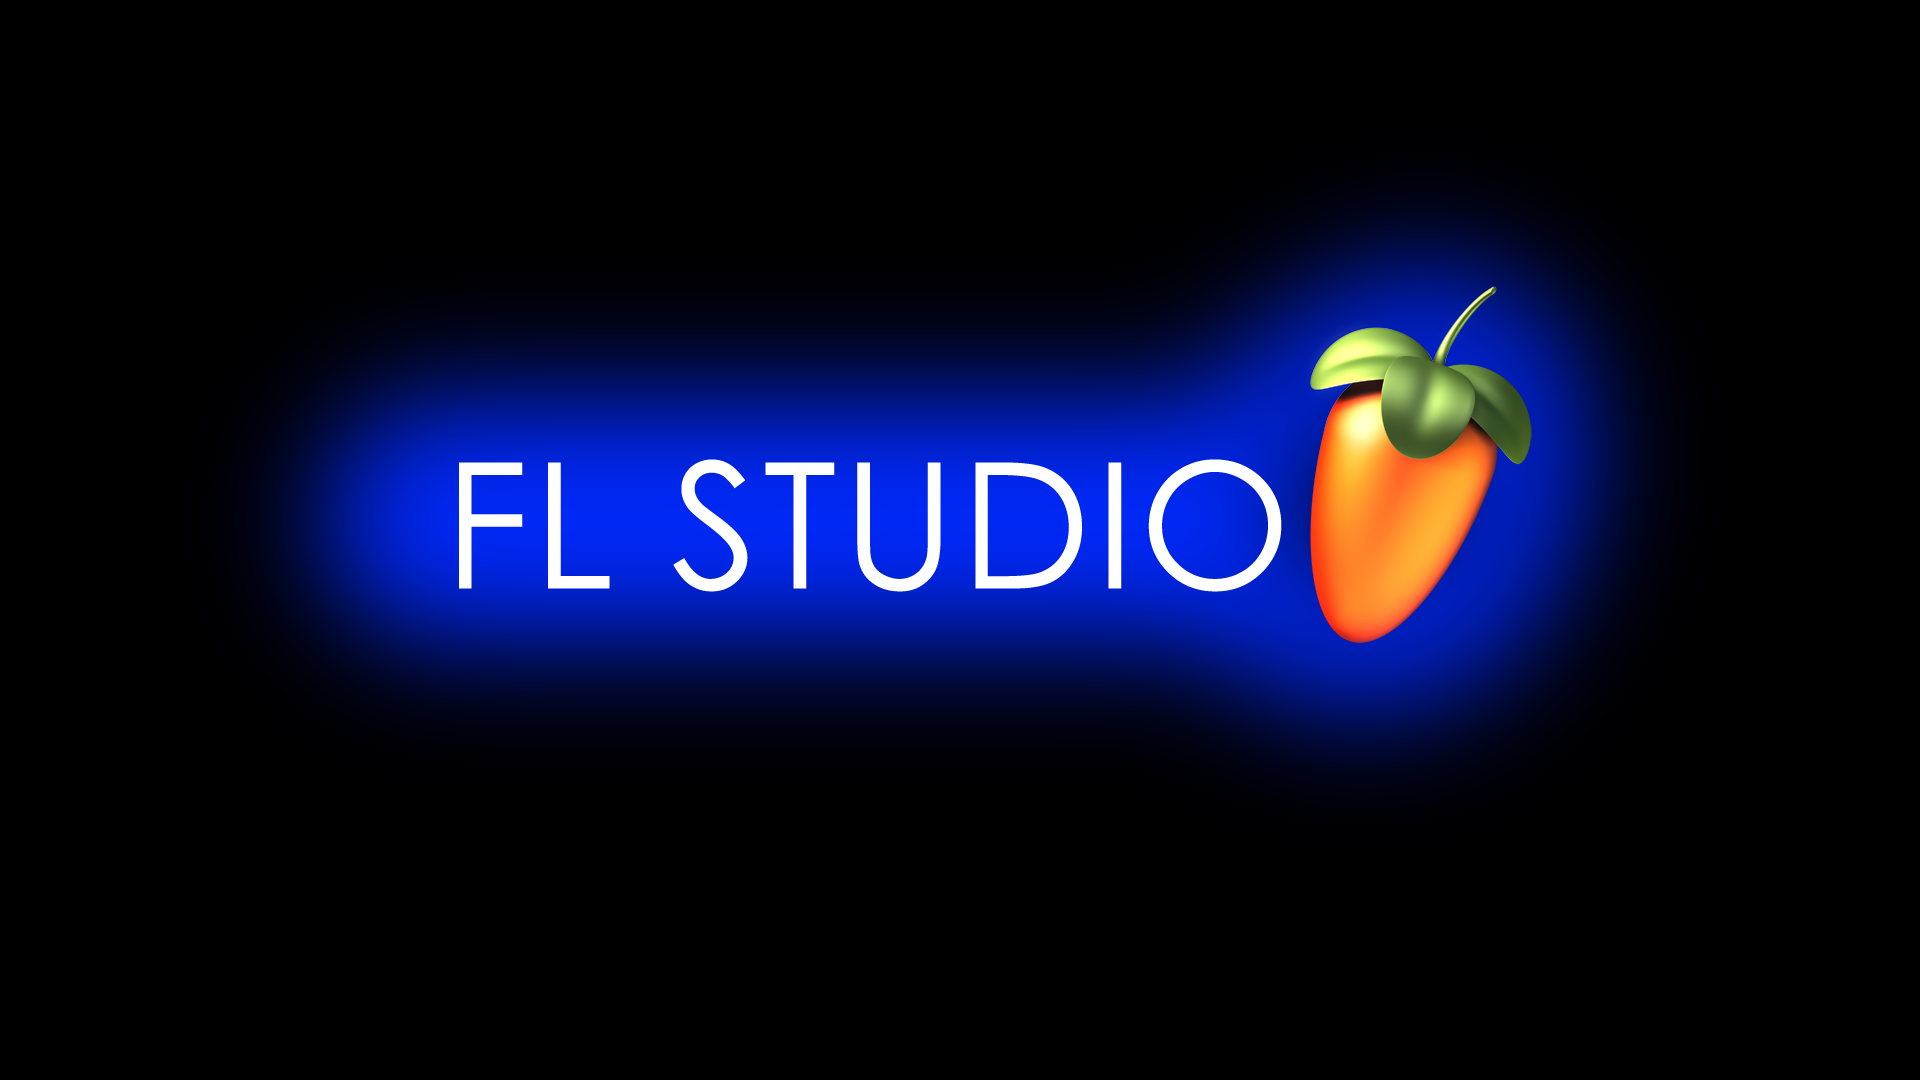 Fl studio free download pc